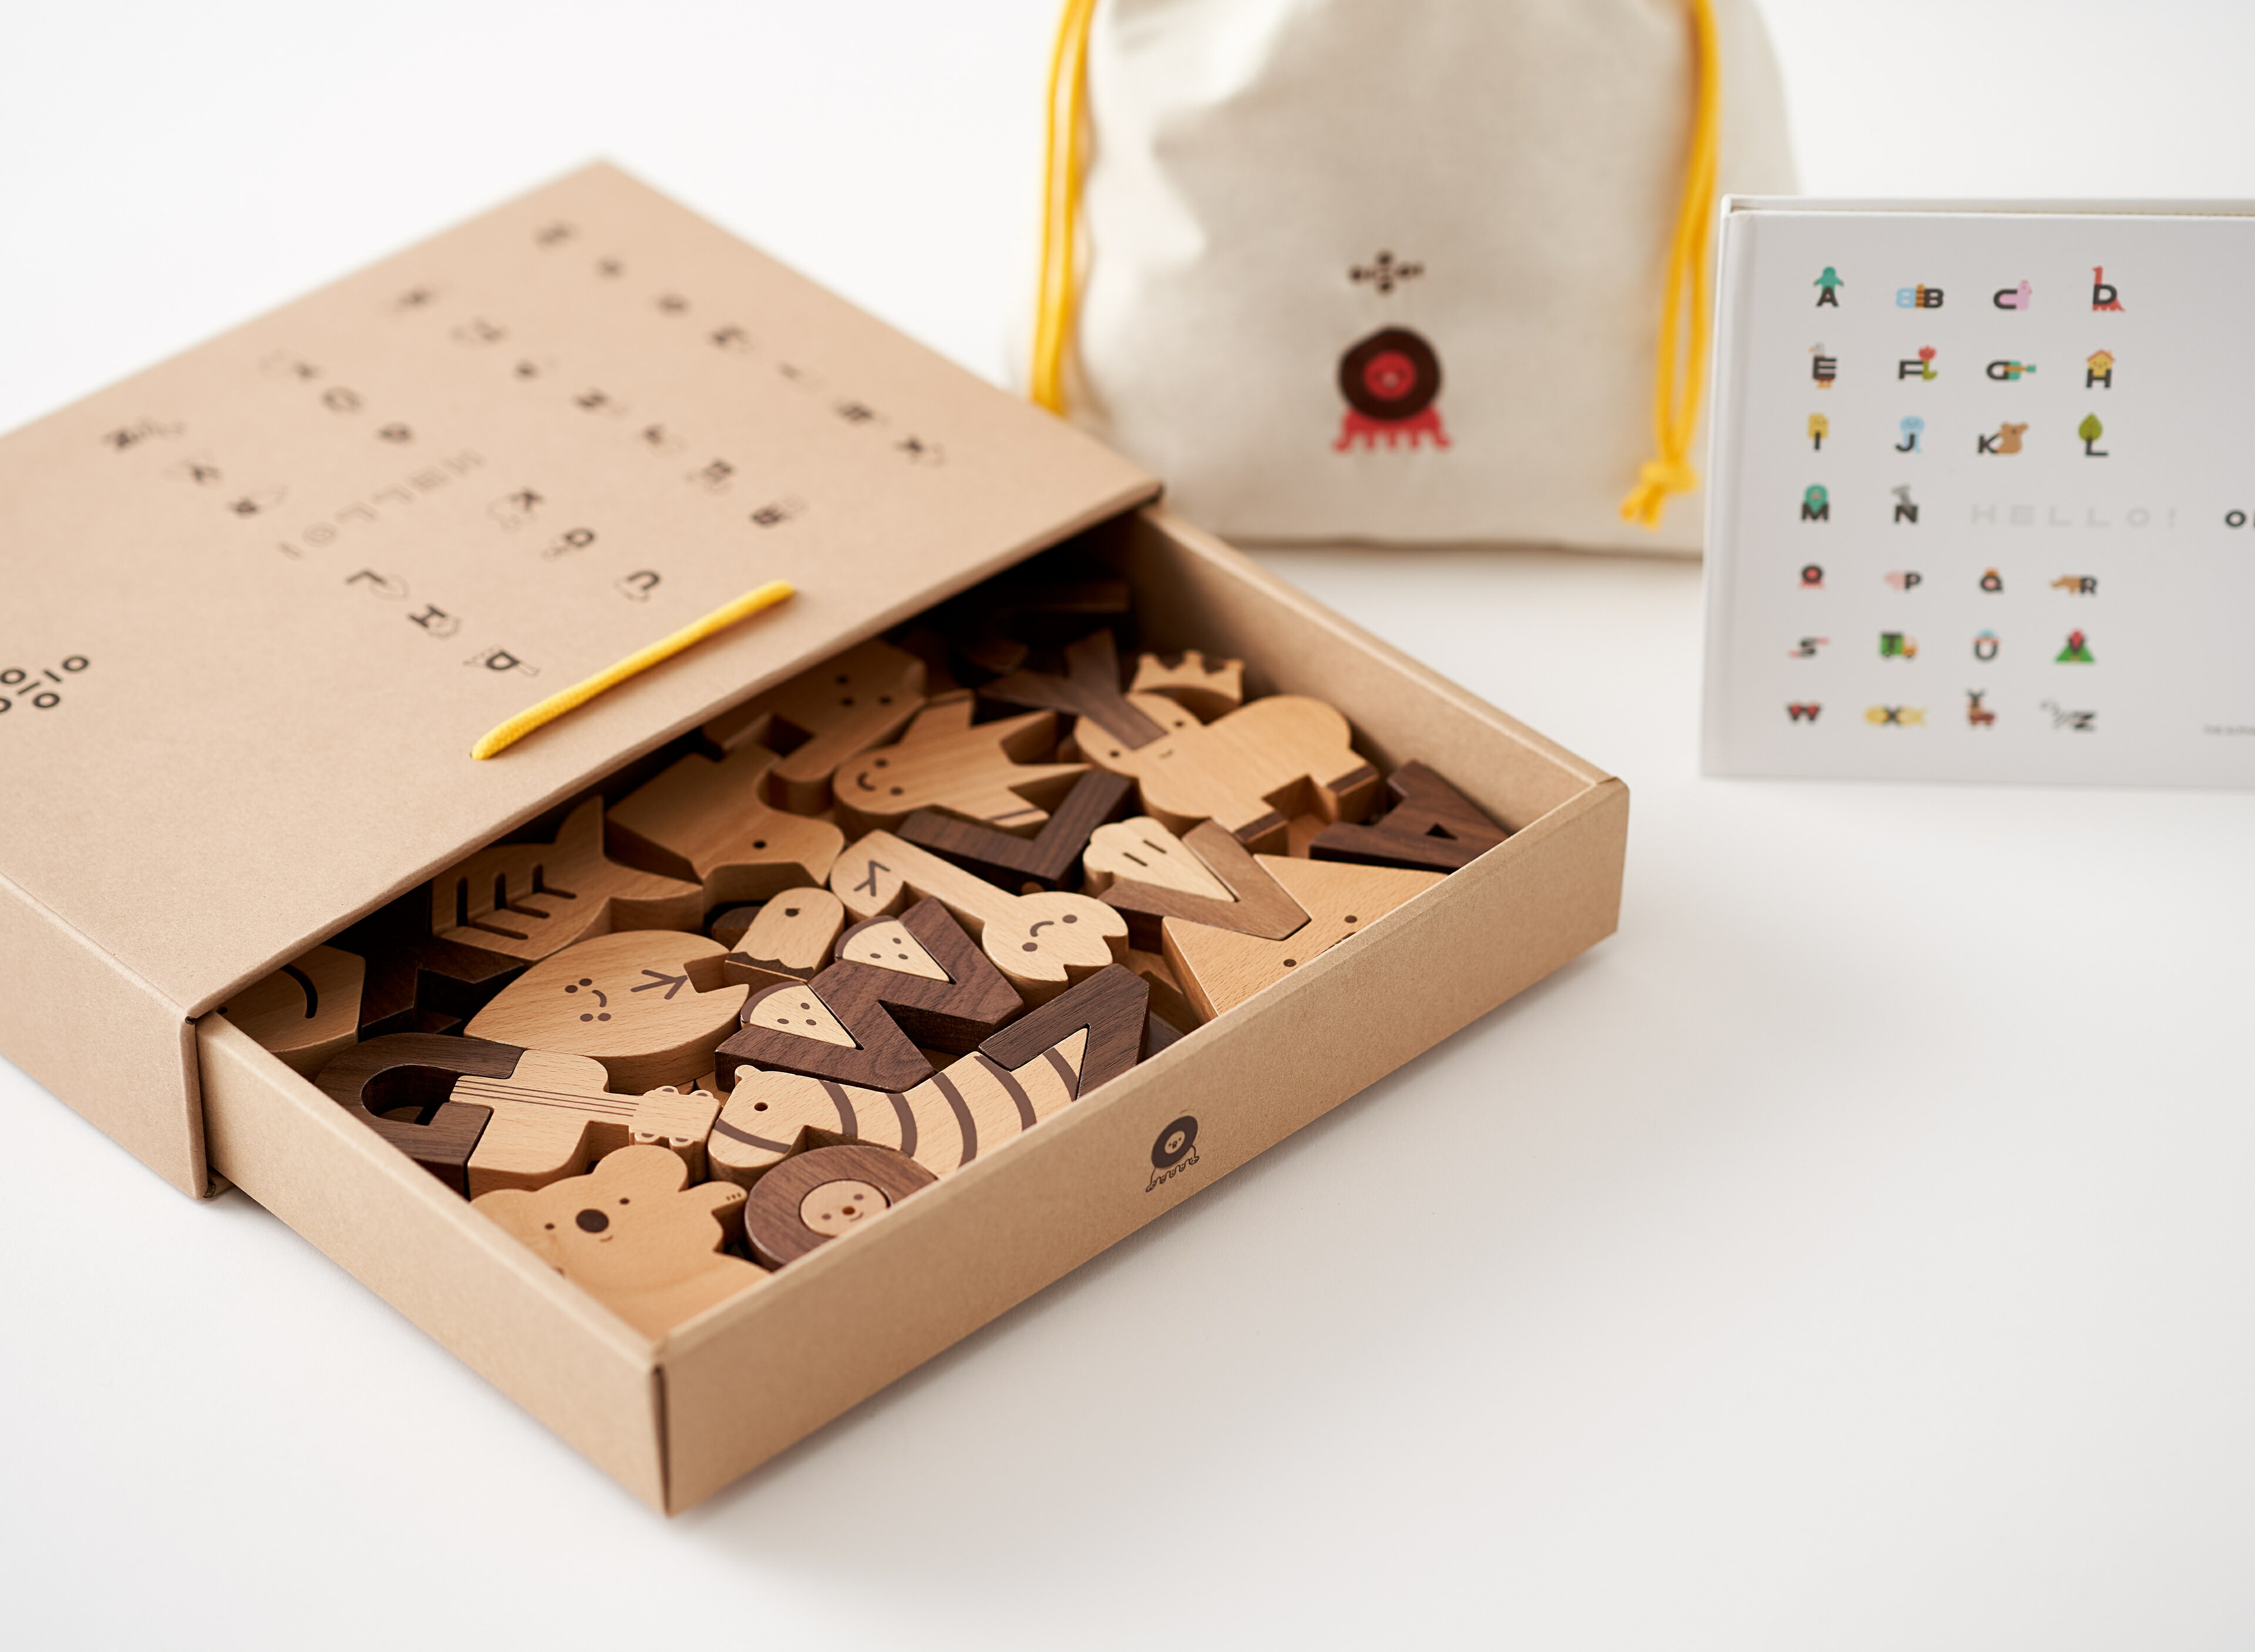 oioiooi アルファベットブロックセット 木のおもちゃ 知育玩具 つみき 積木 出産祝い あす楽対応 送料無料 2